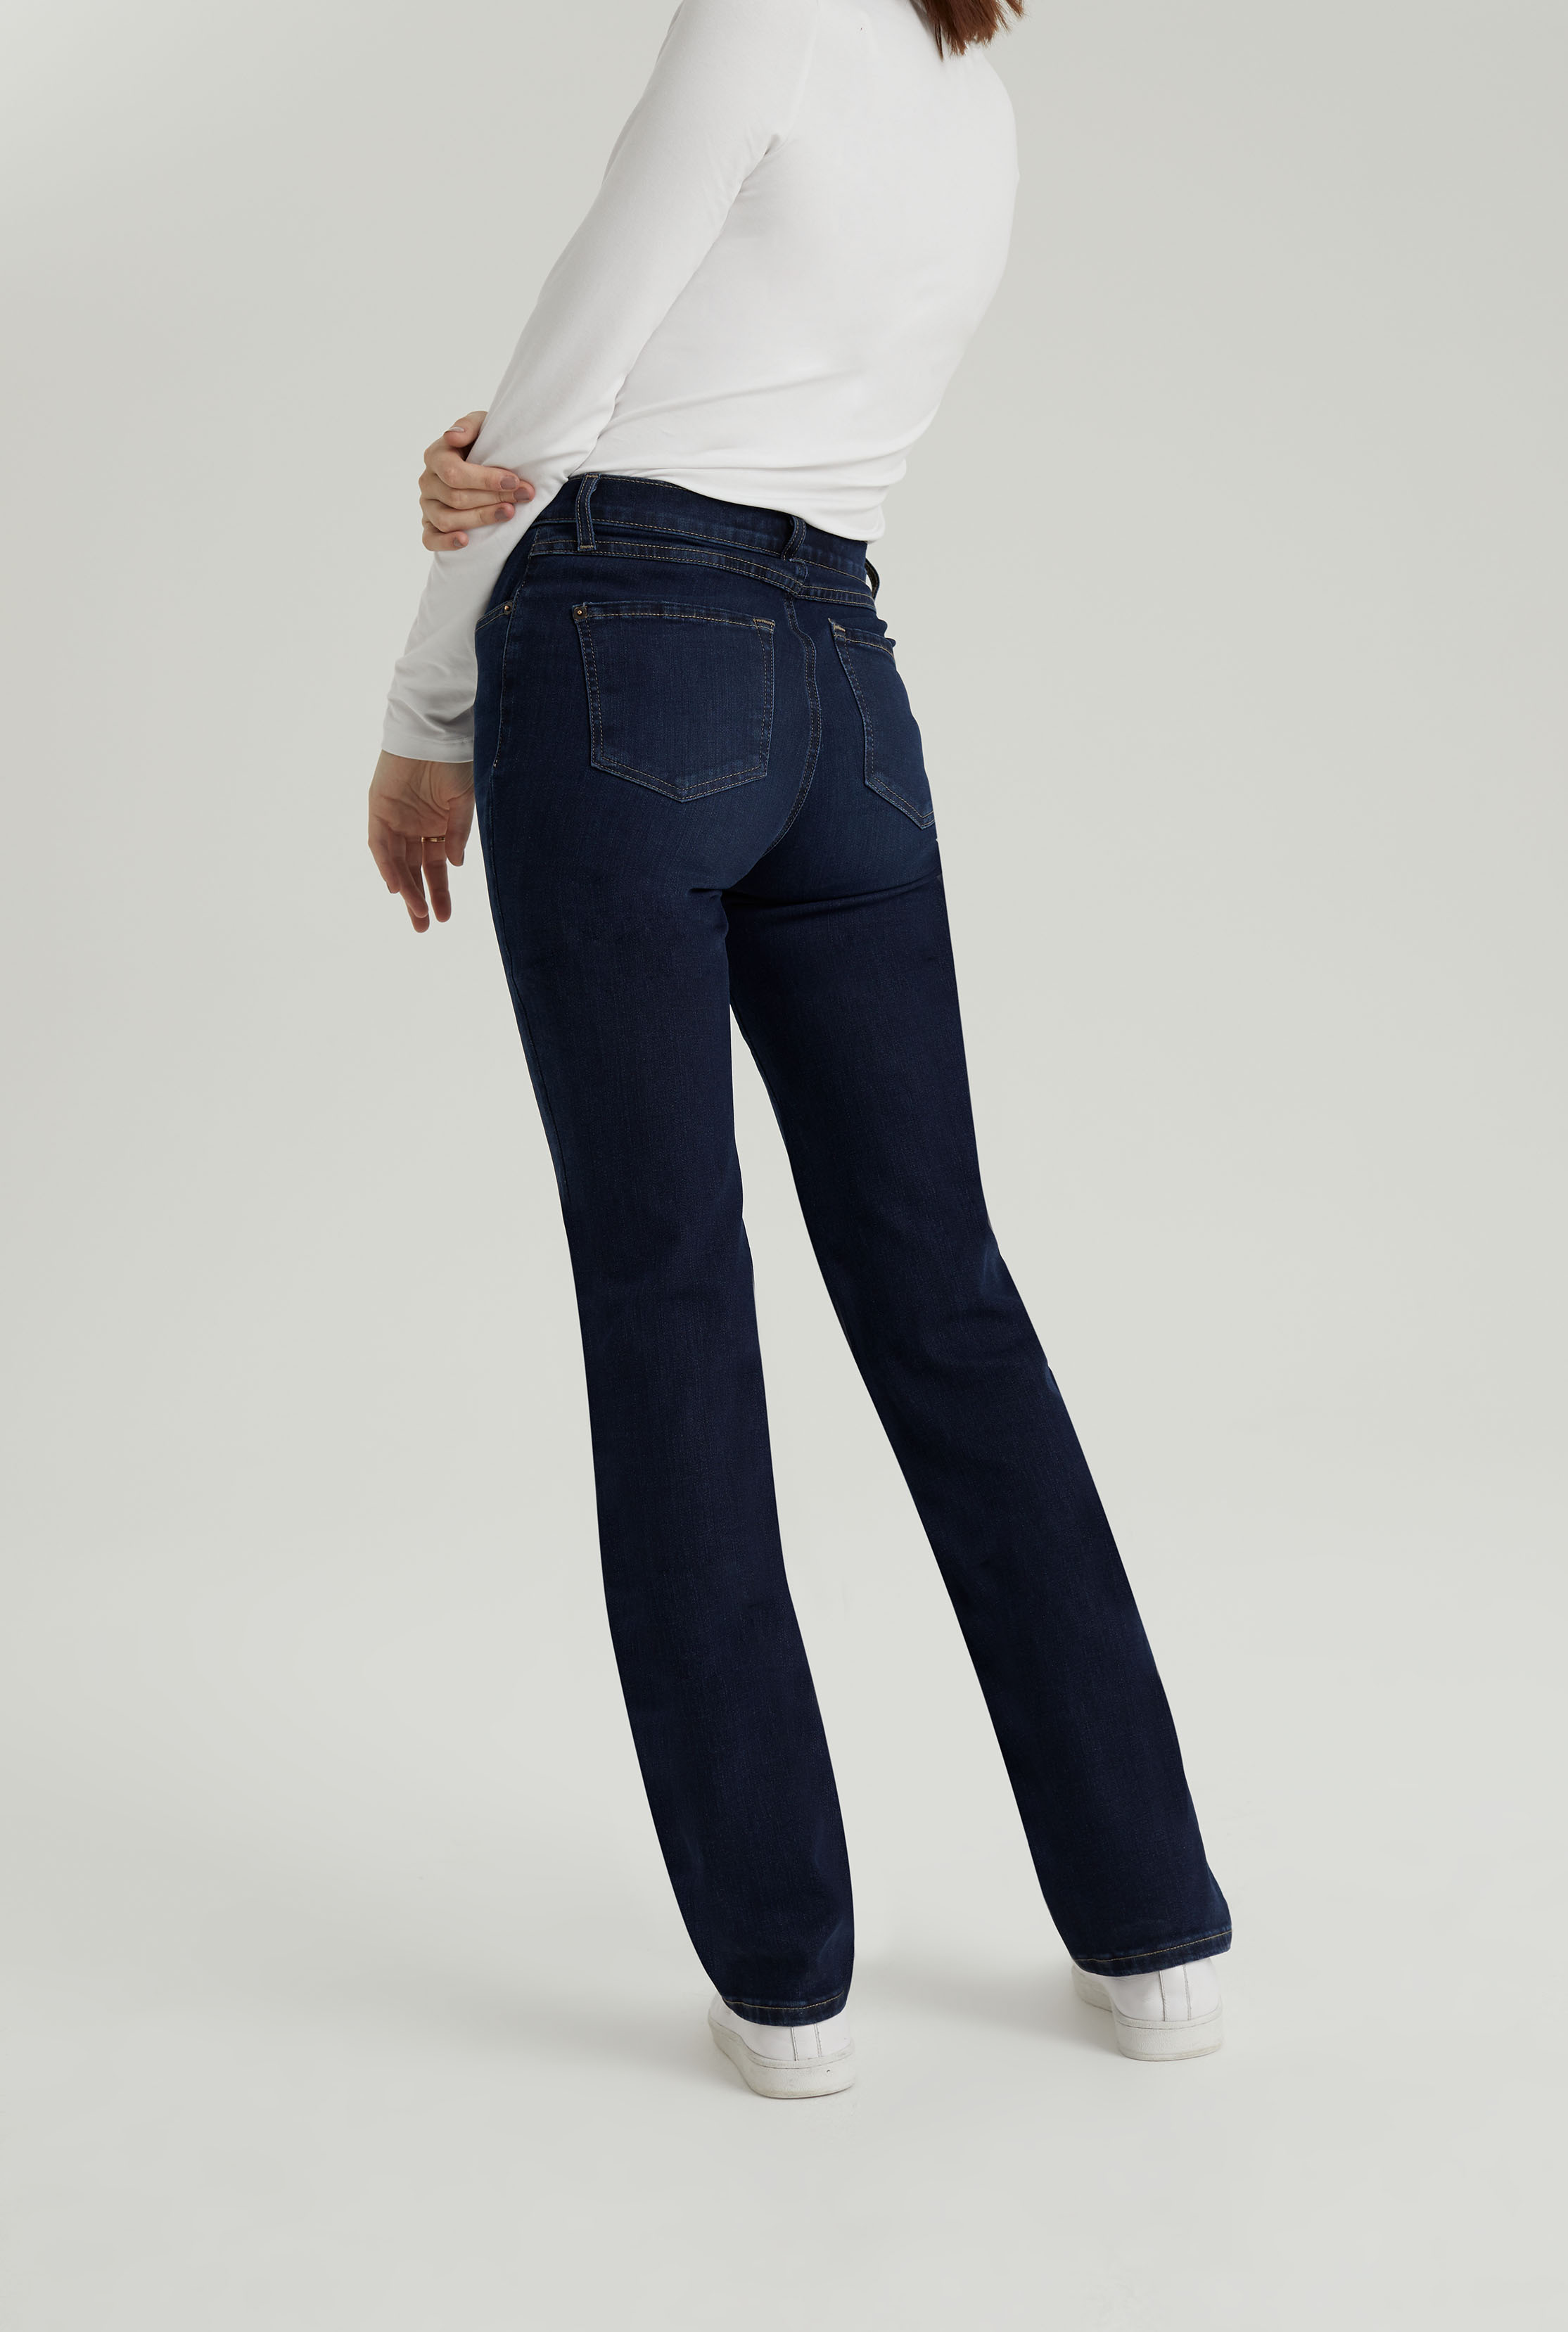 YOGA JEANS Chloe Straight Leg Namaste Jeans | Long Tall Sally